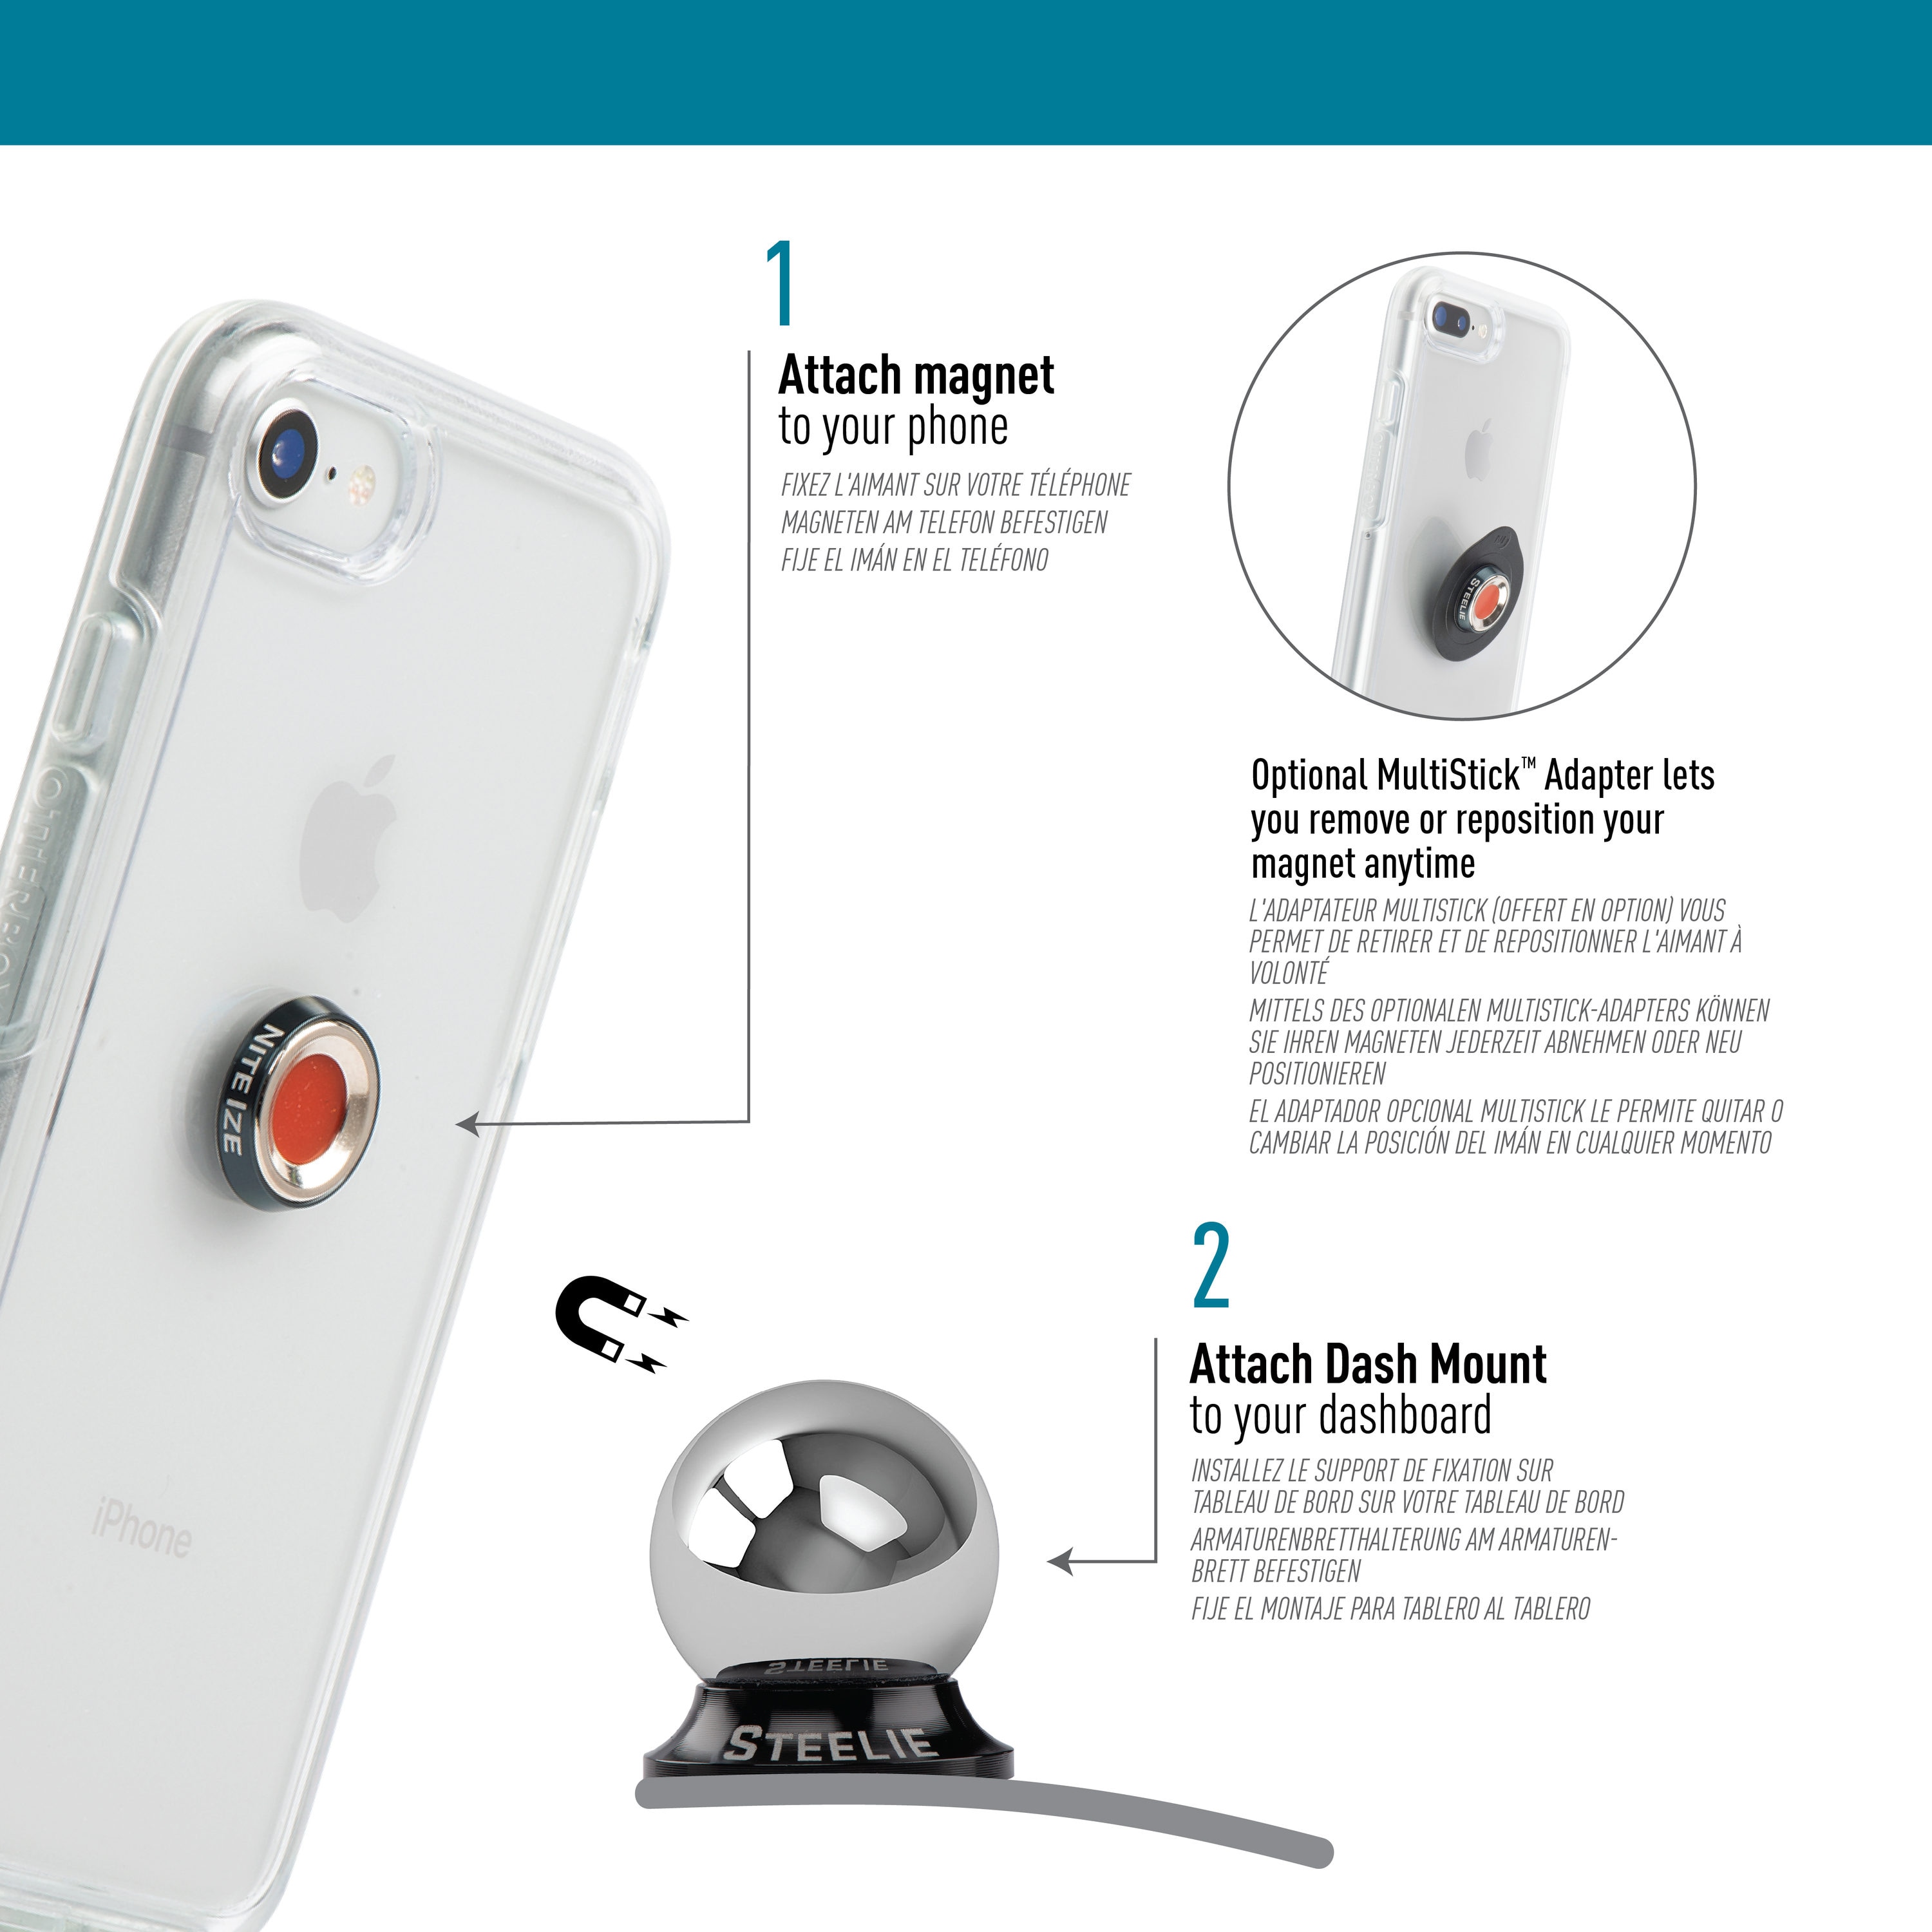 Nite Ize Steelie 360° Magnetic Mount Original Magnetic Phone